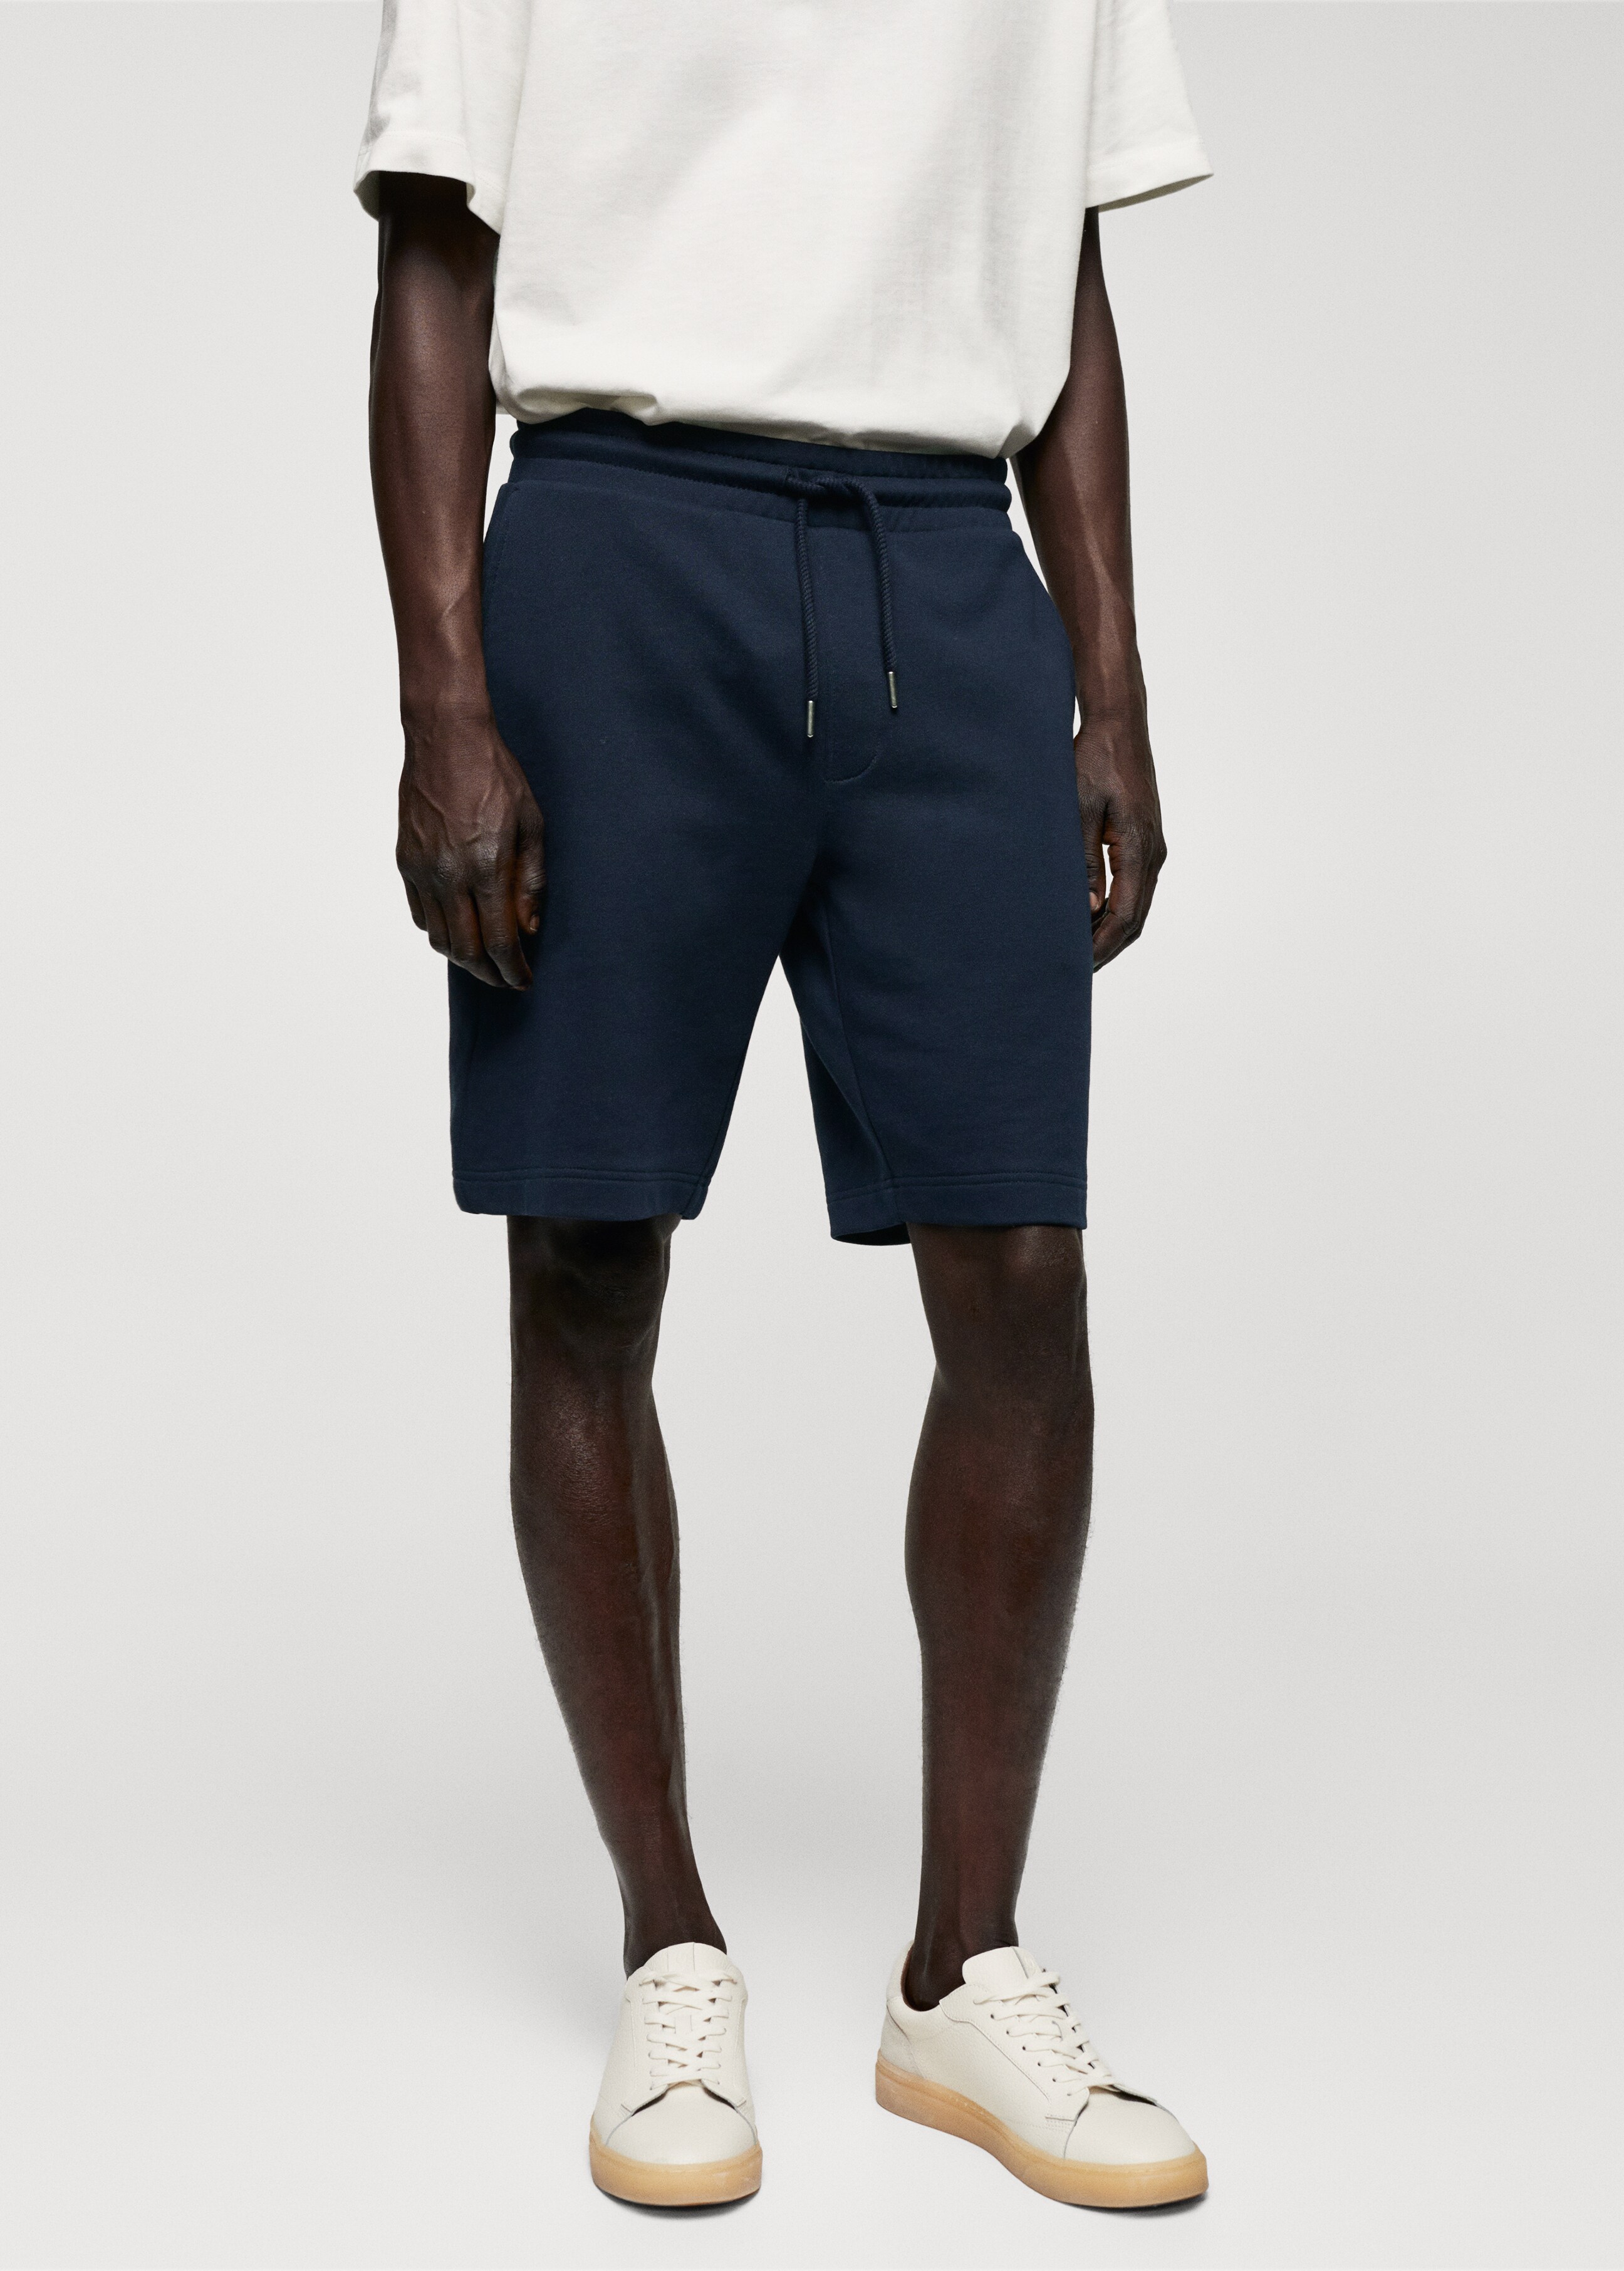 Jogger cotton Bermuda shorts - Medium plane